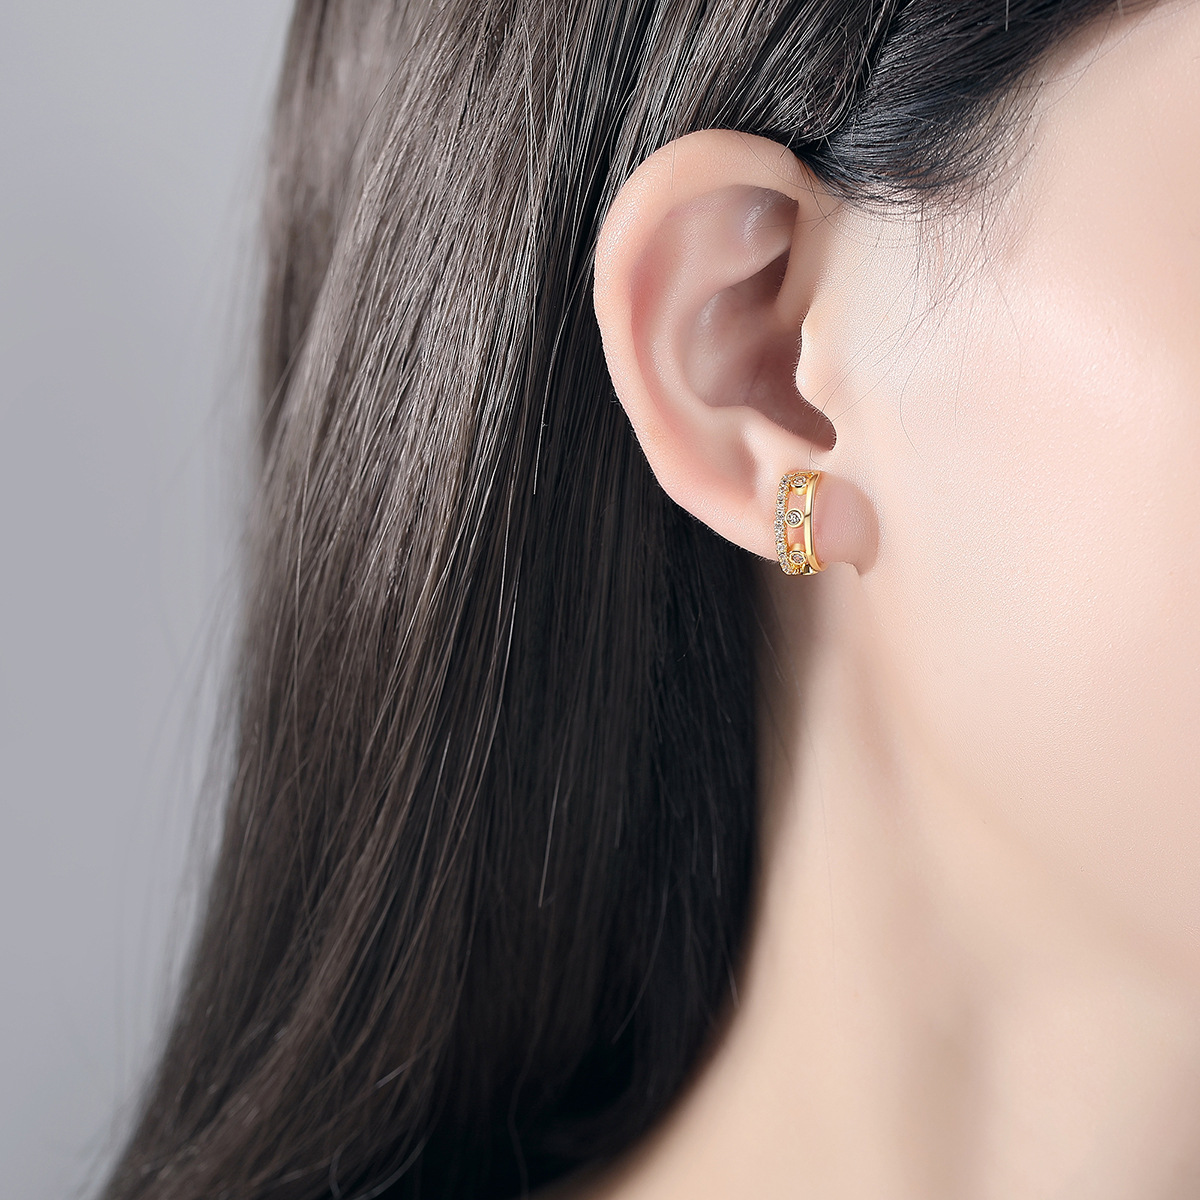 Korean style earrings